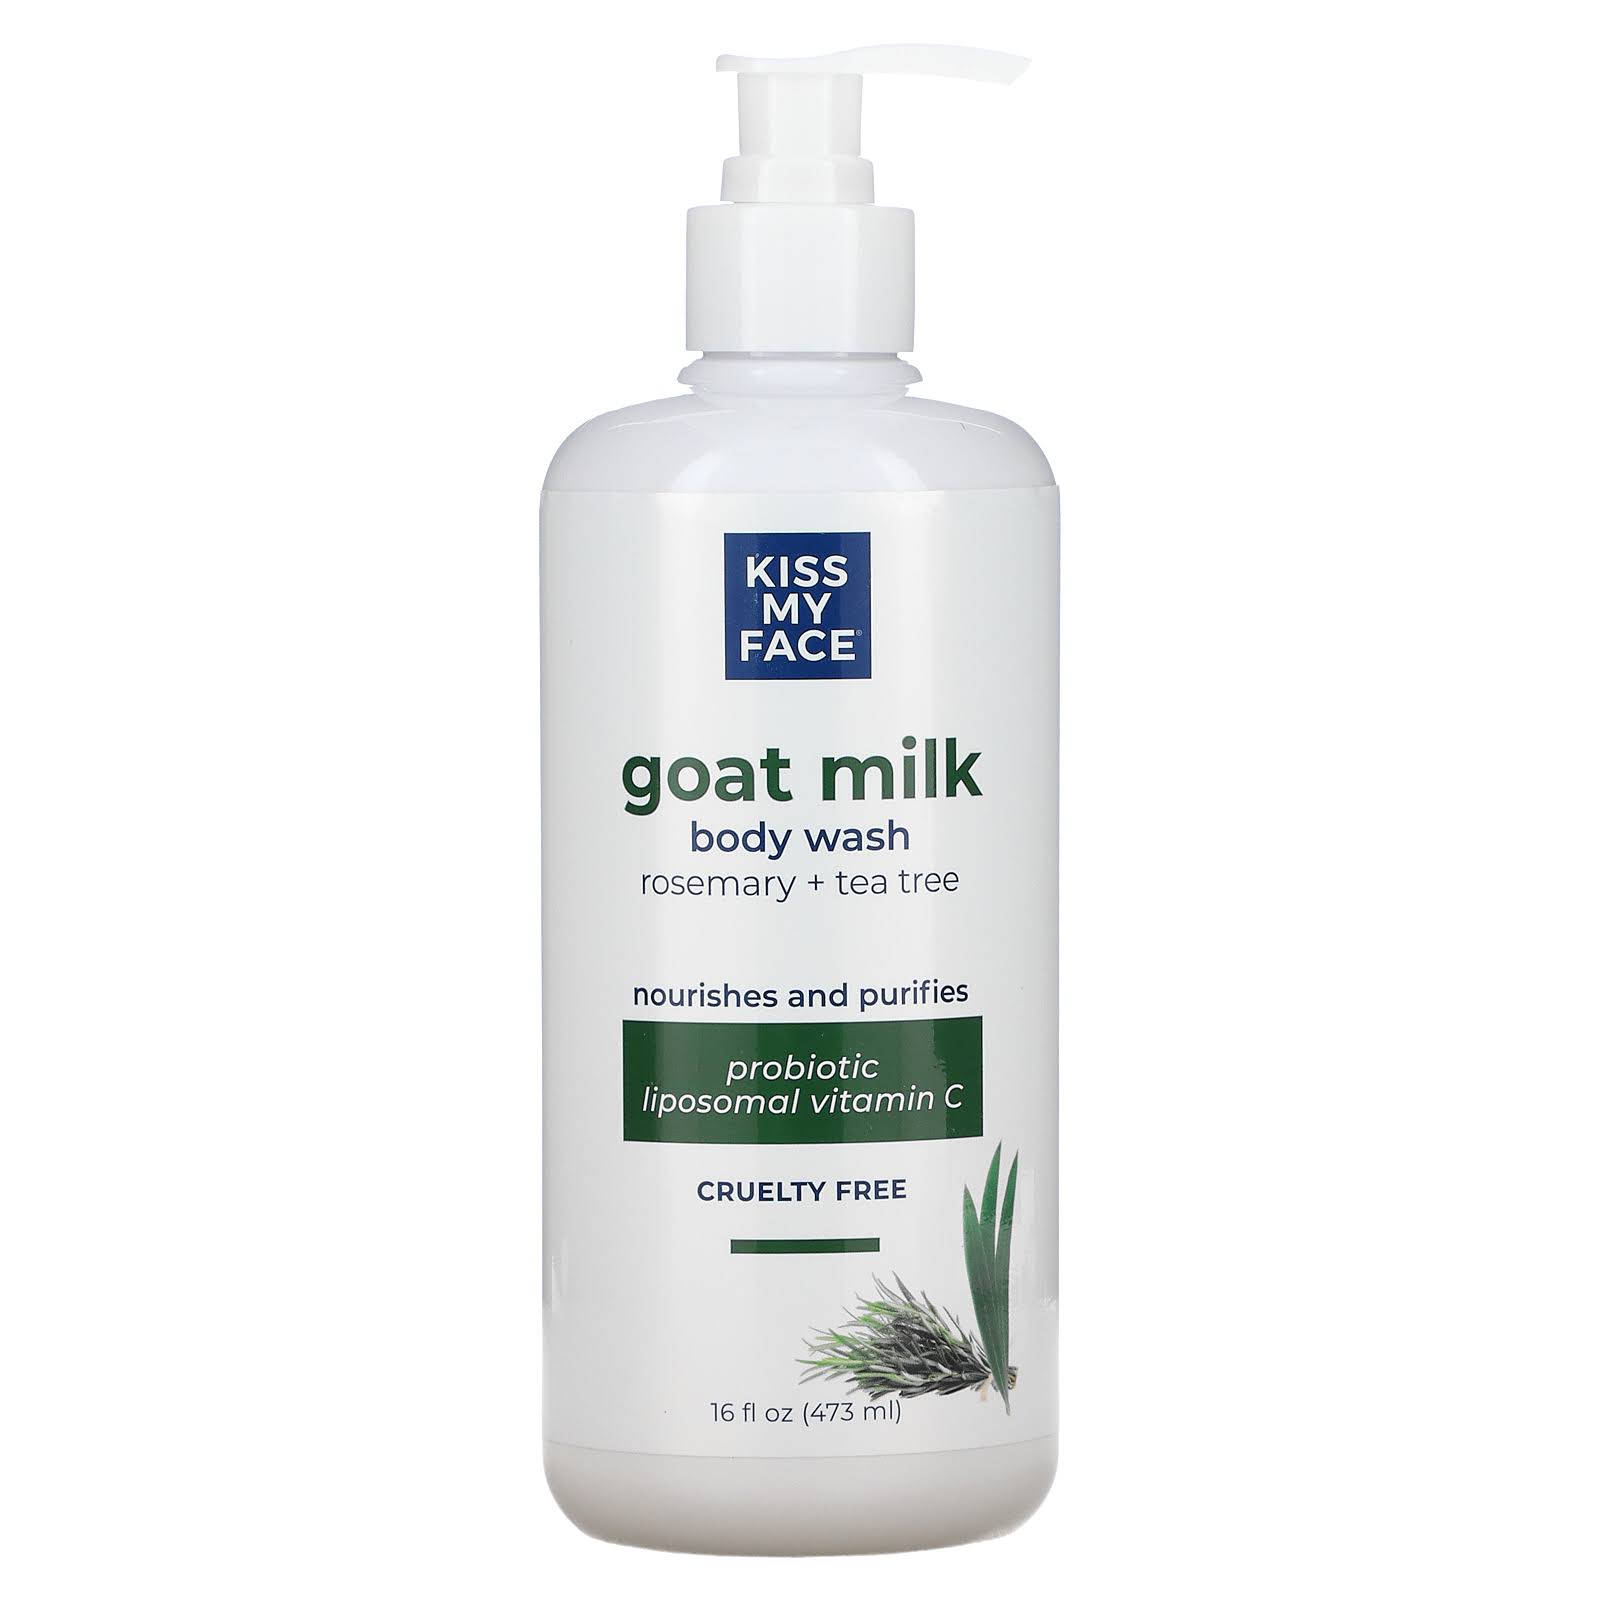 Kiss My Face Goat Milk Body Wash - Rosemary Tea Tree - 16 fl oz (473 ml)